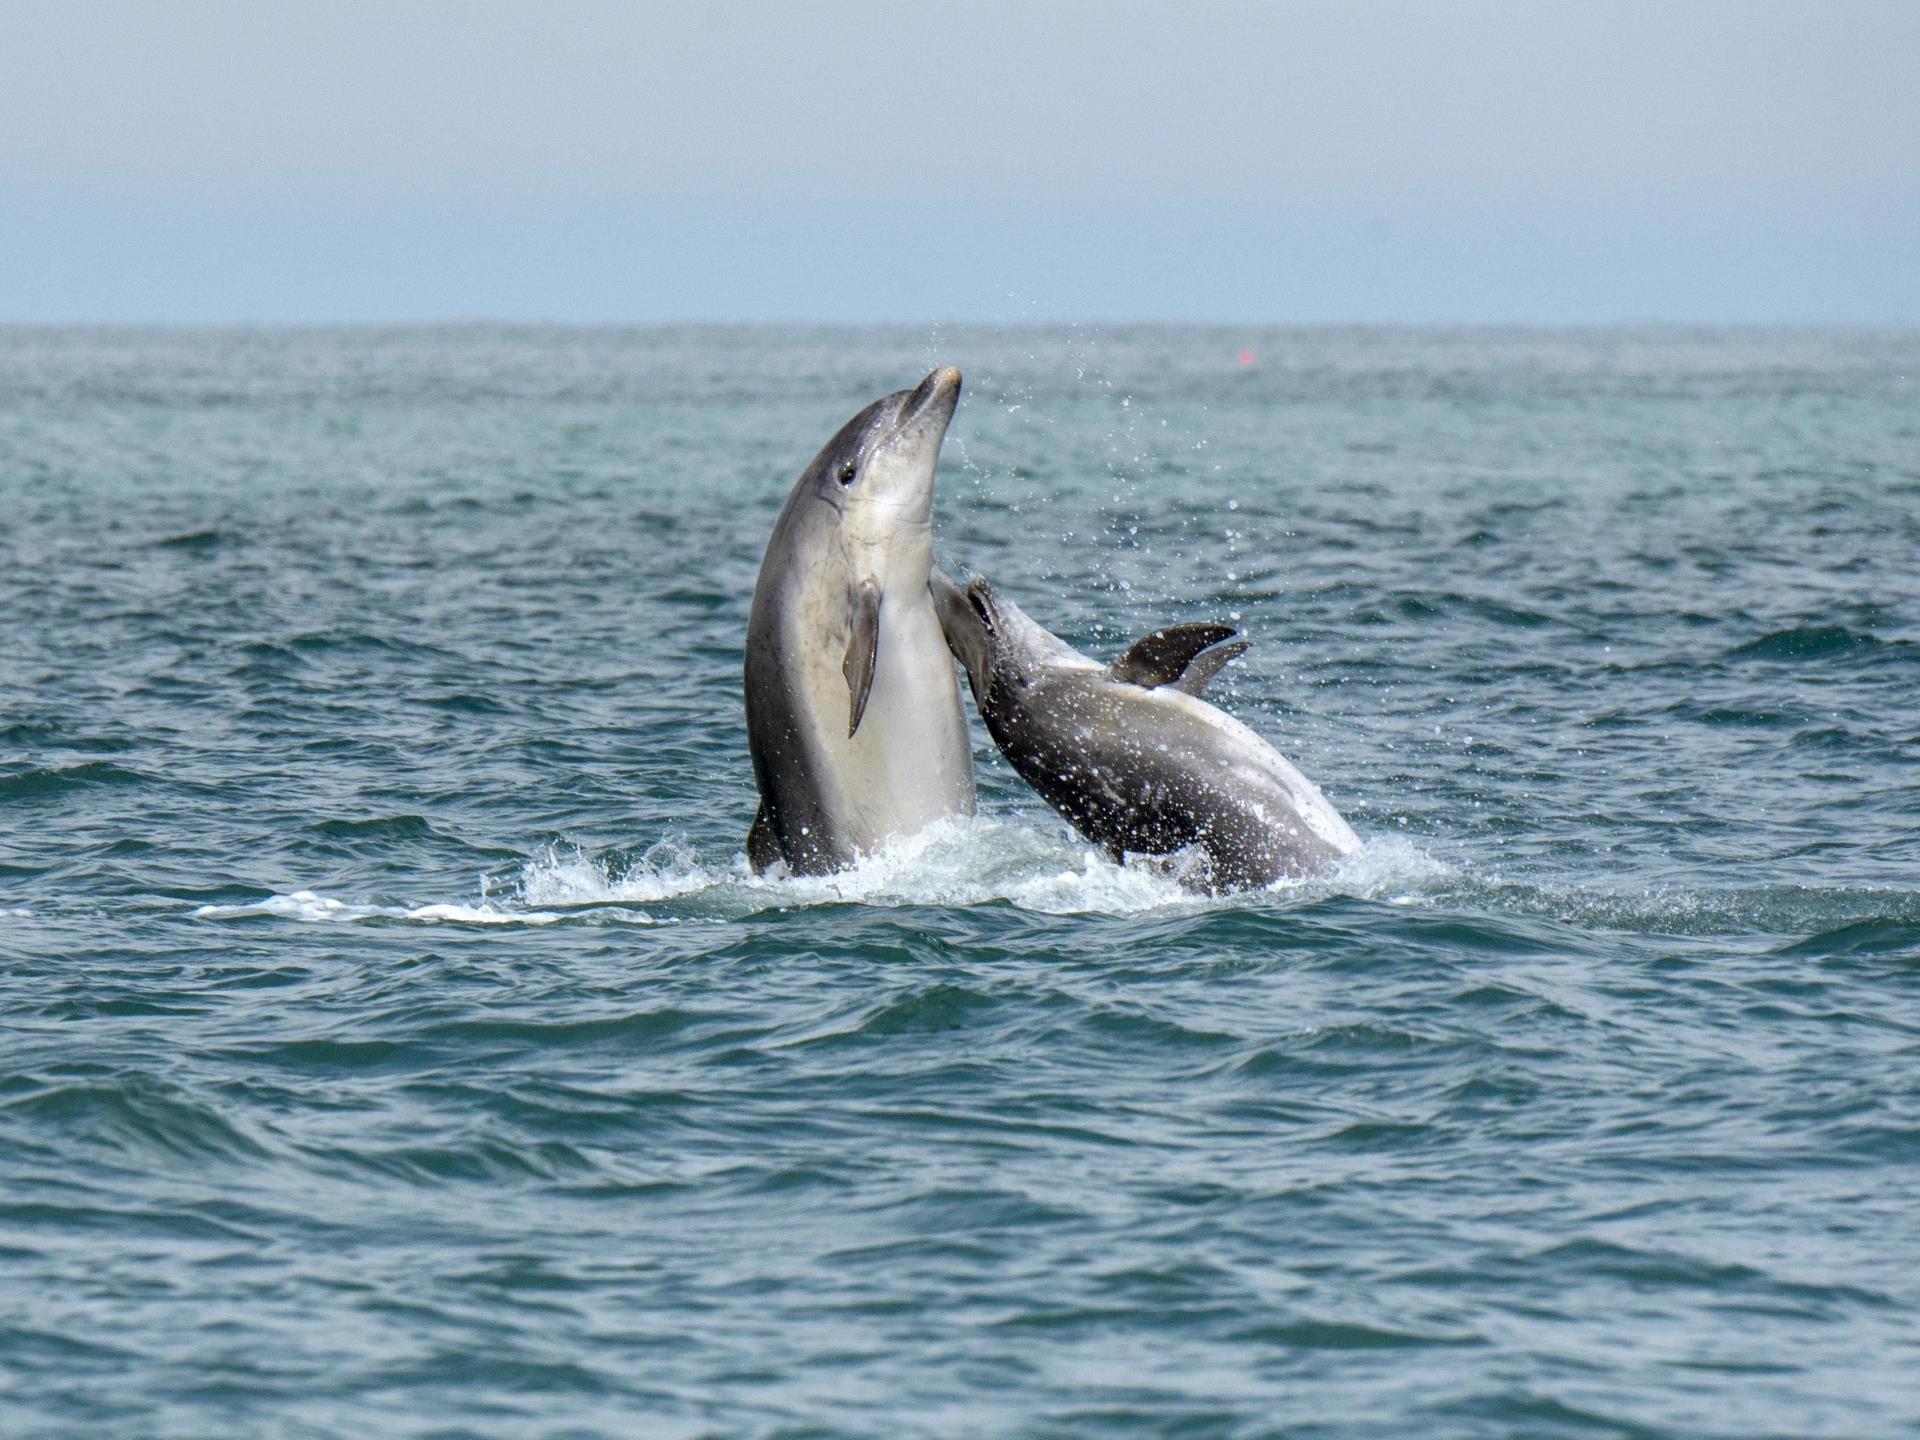 Bottlenose dolphins breaching near the boat